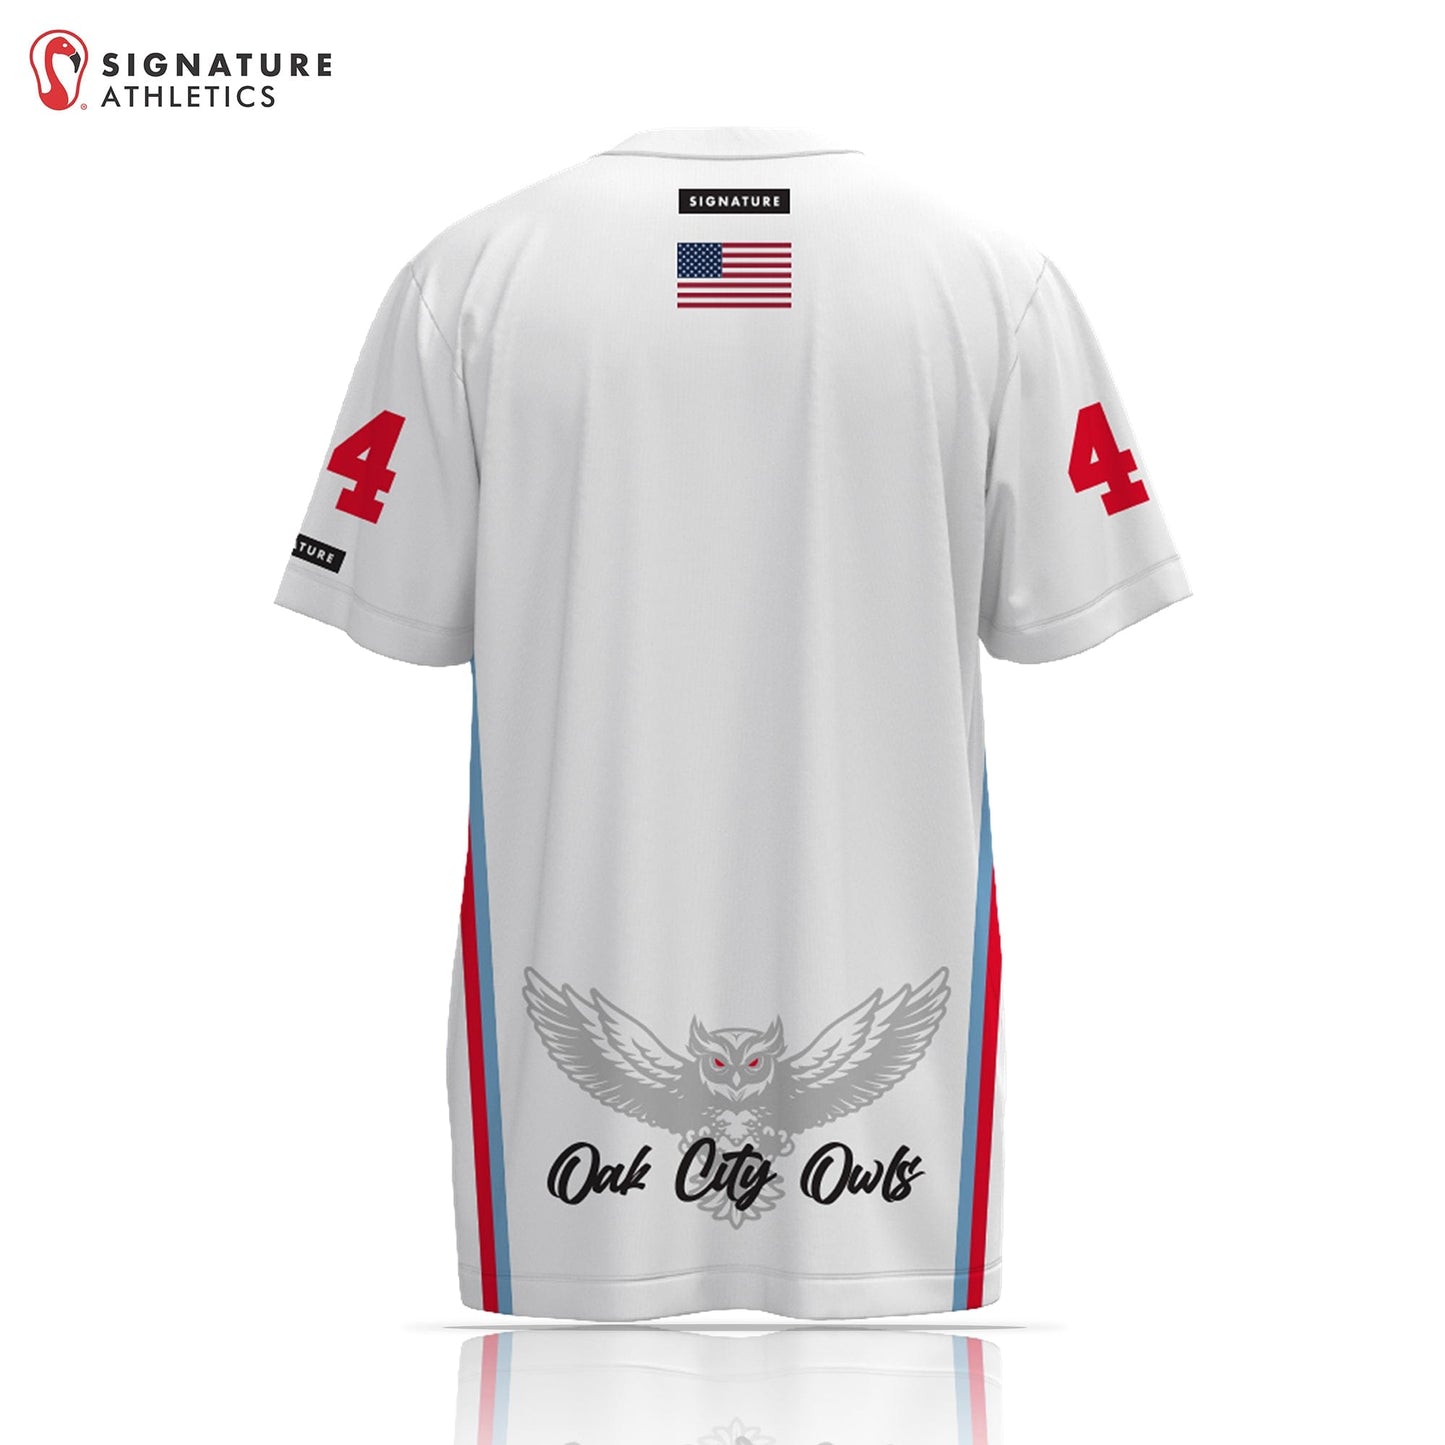 Oak City Owls Lacrosse Player White Short Sleeve Shooting Shirt Signature Lacrosse